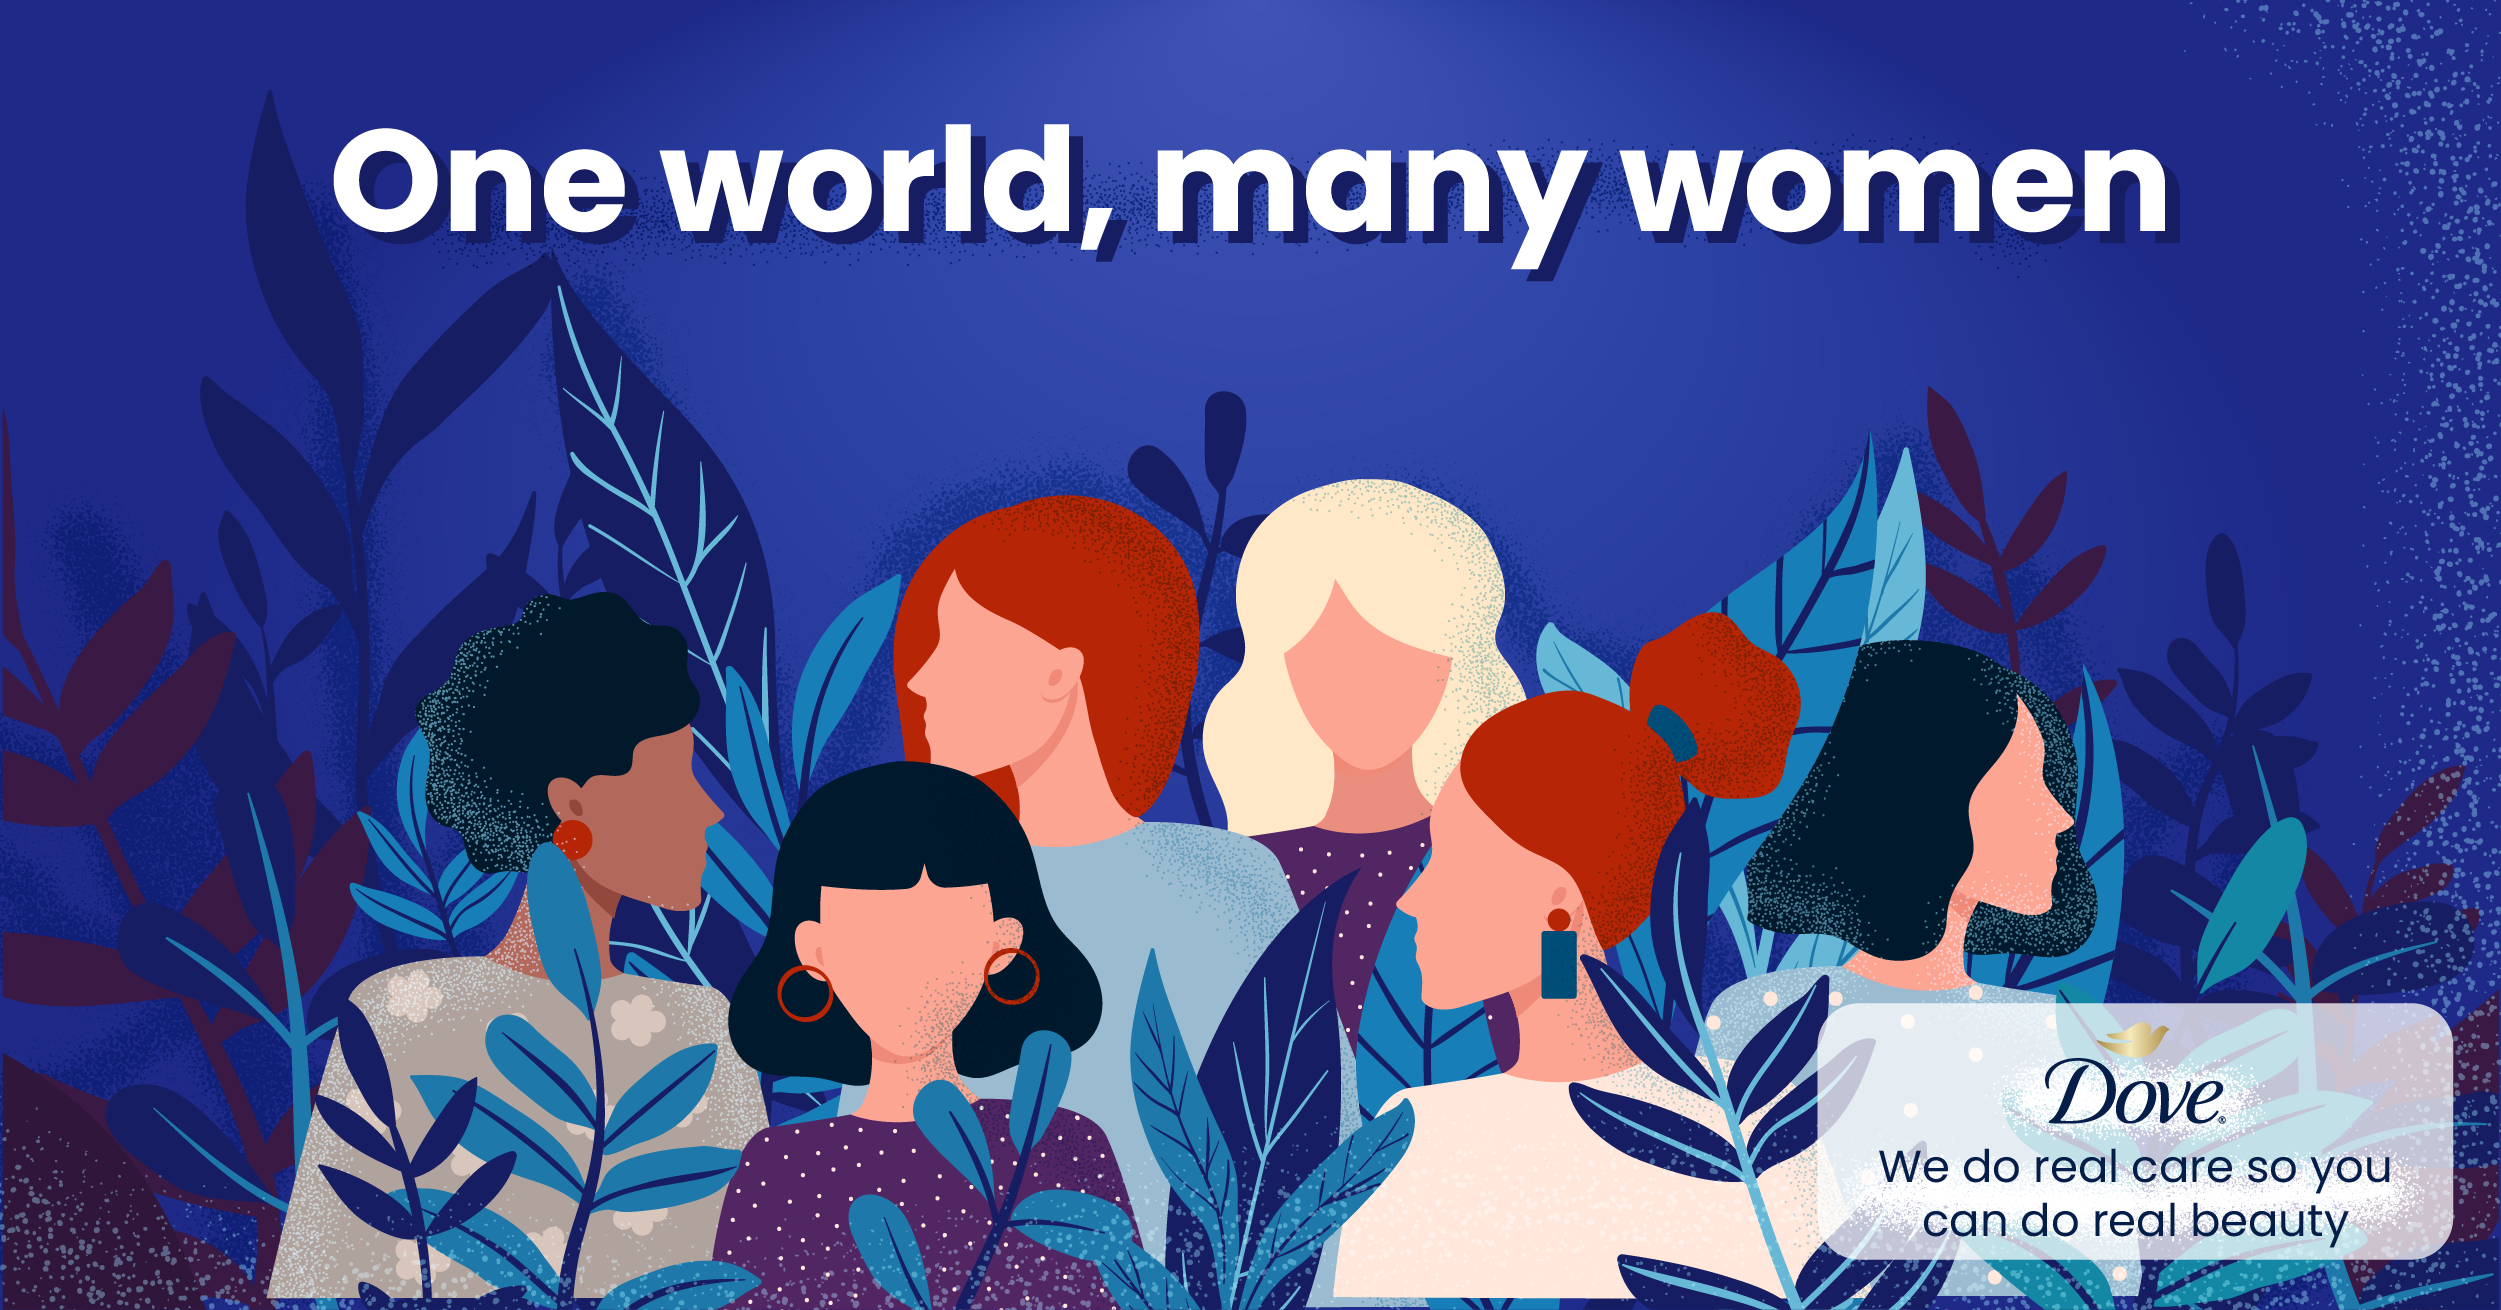 One world, many women